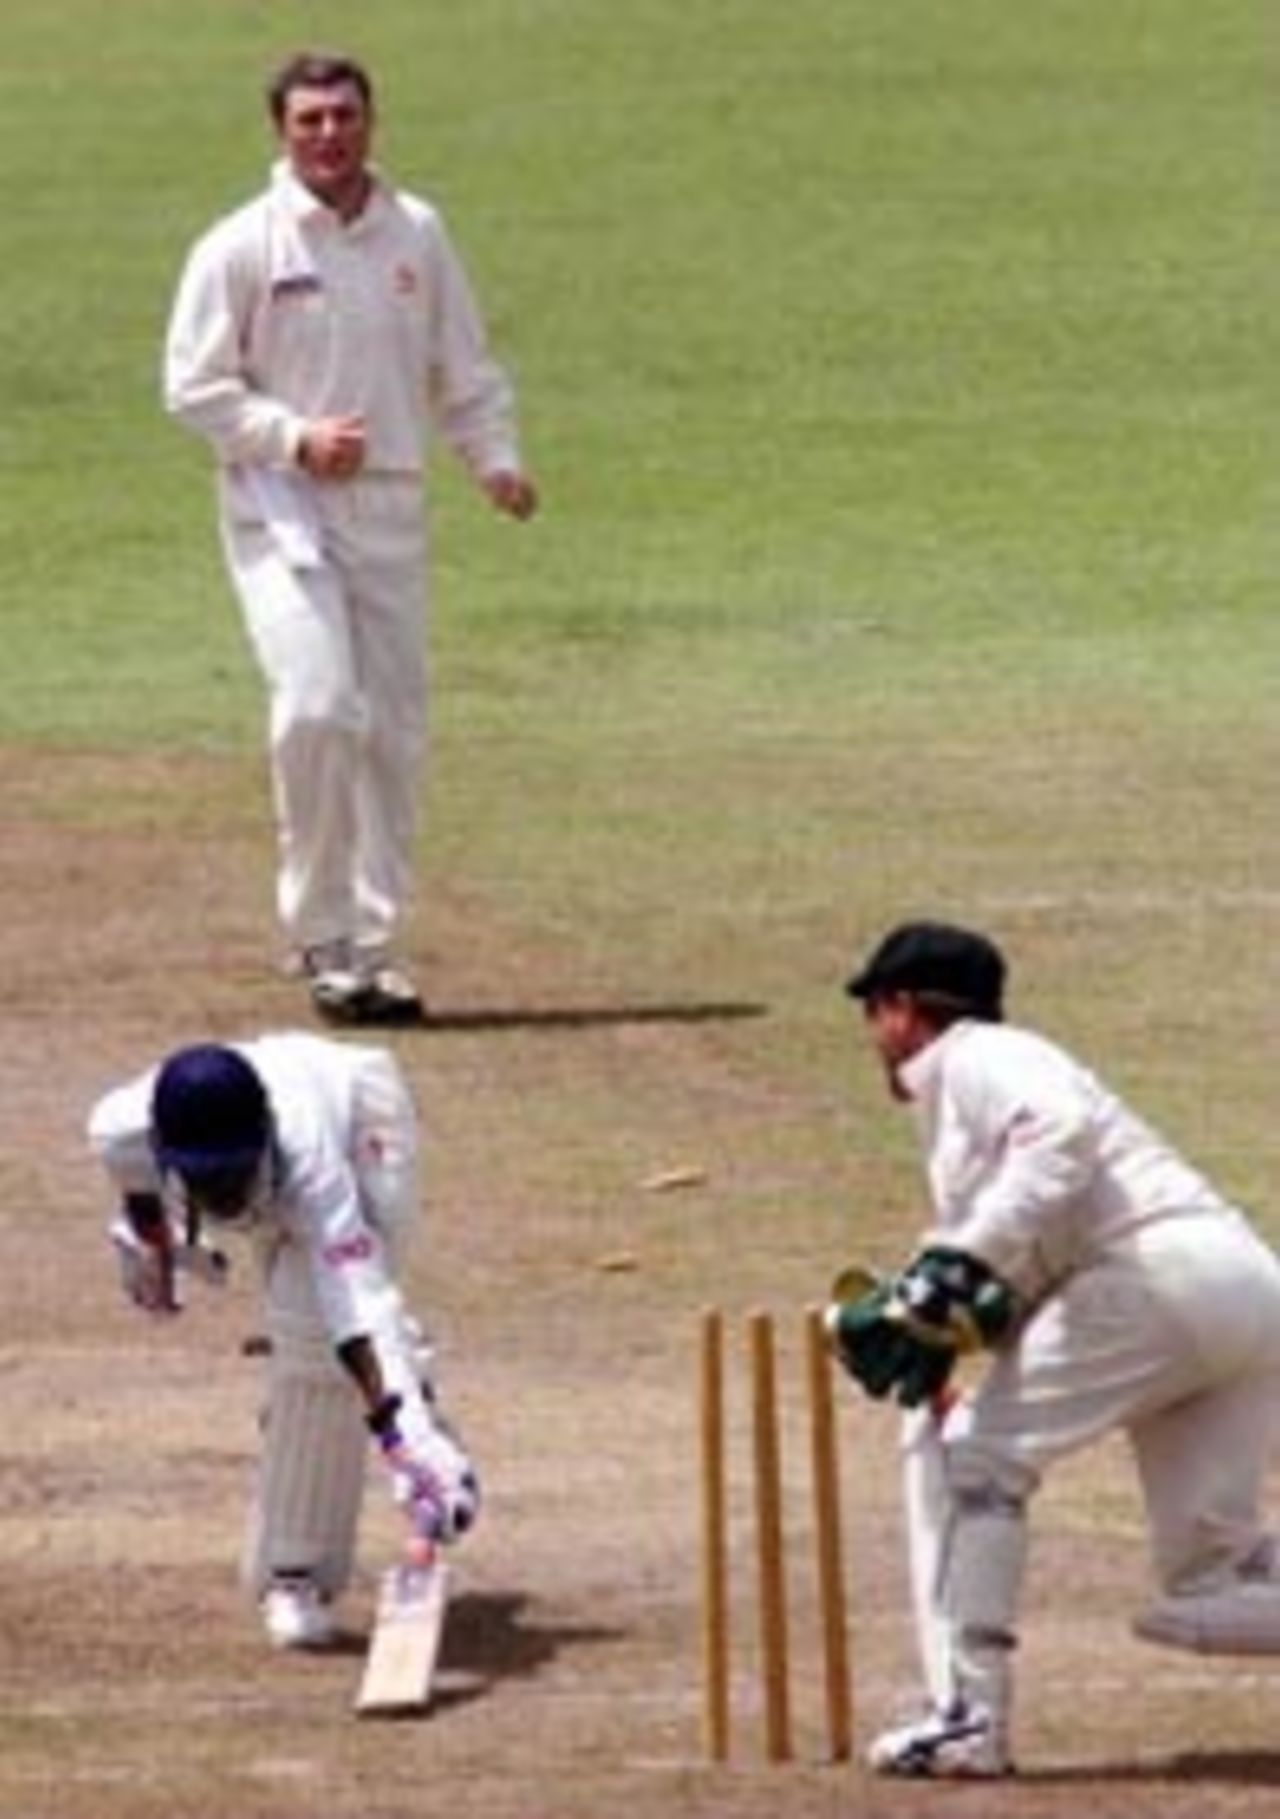 4 Sep 1999: Indika de Saram of the Board XI is stumped by Ian Healy of Australia off the bowling of Stuart MacGill, during day two of the tour match between the Sri Lanka Board XI and Australia at Saravanamuttu Stadium, Colombo, Sri Lanka.